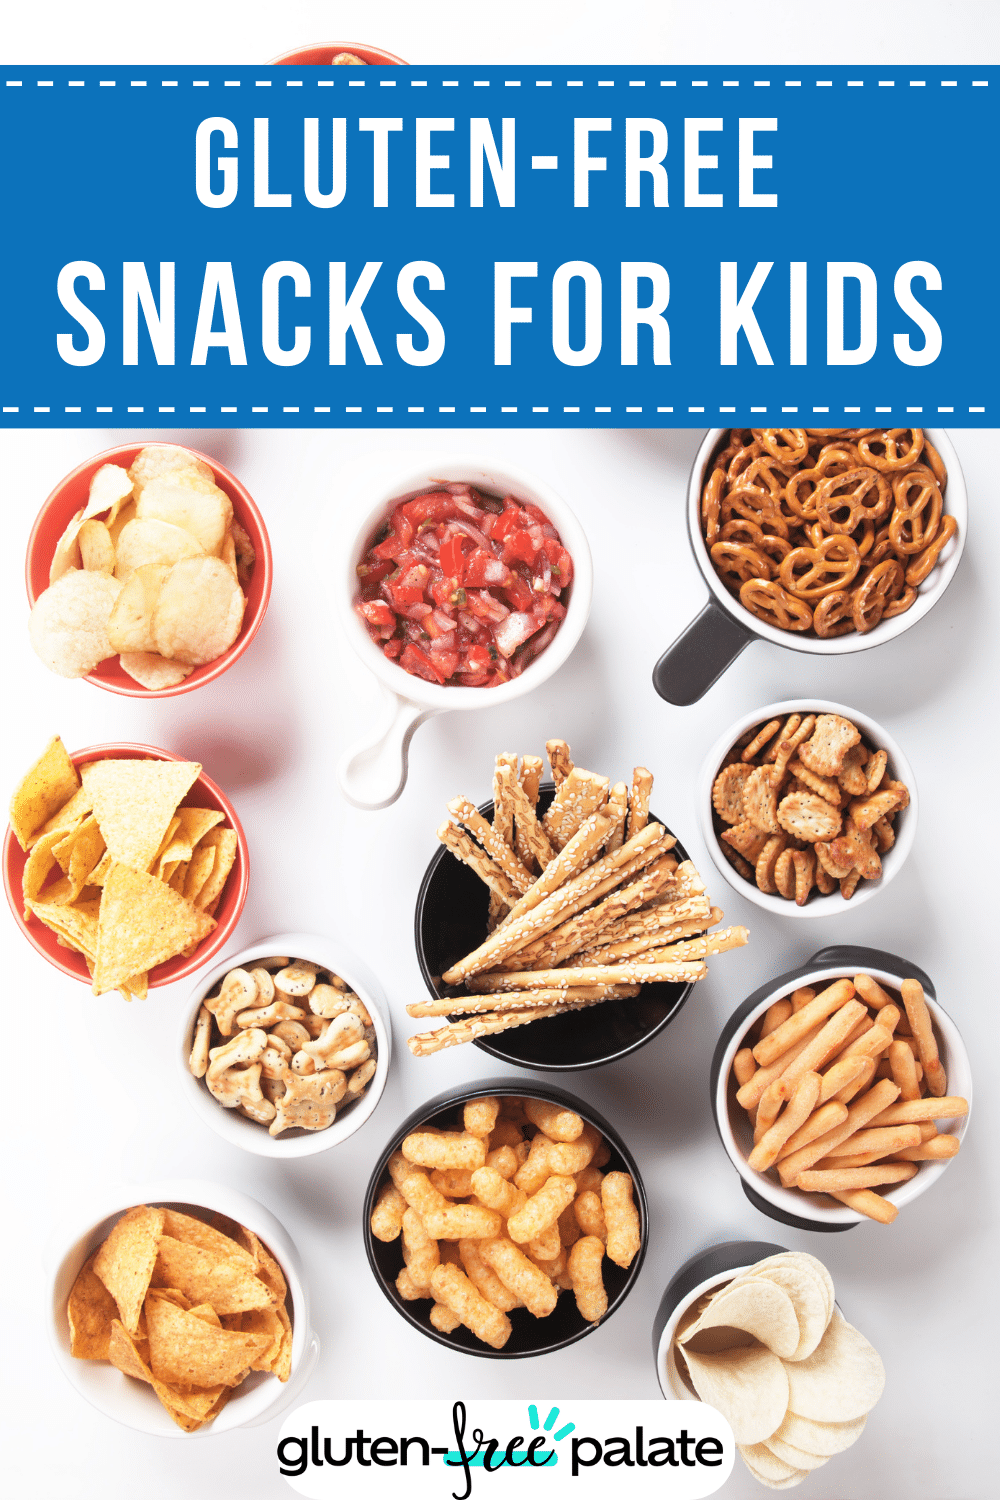 Affordable celiac-friendly kids snacks